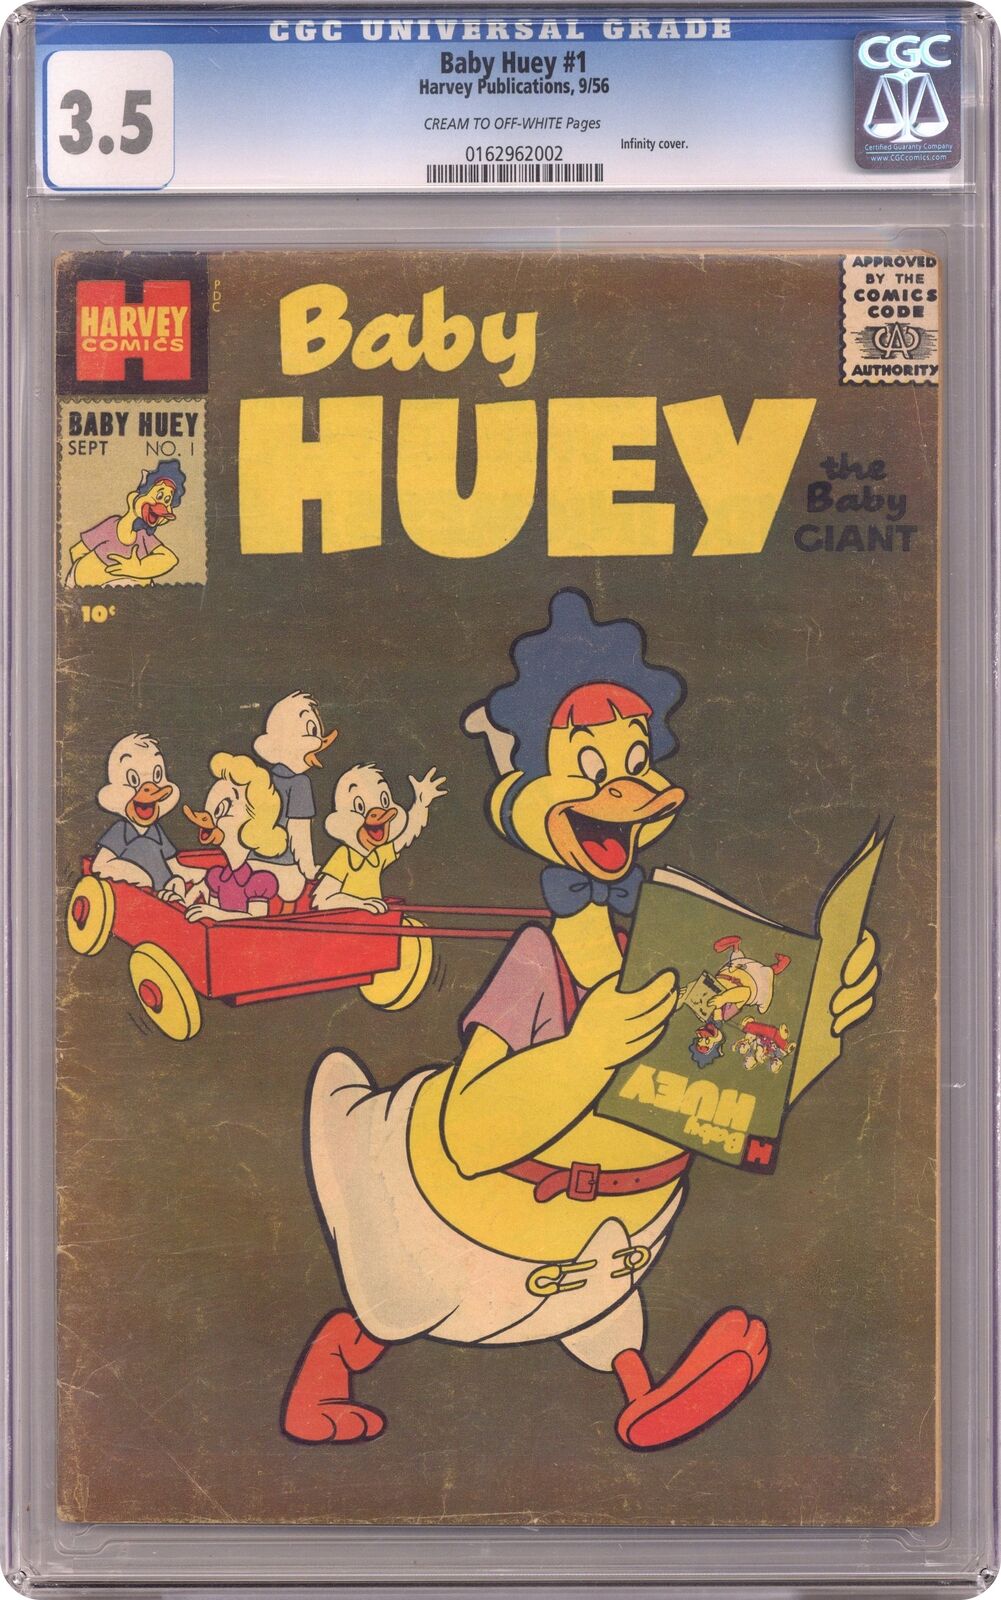 Baby Huey the Baby Giant #1 CGC 3.5 1956 0162962002